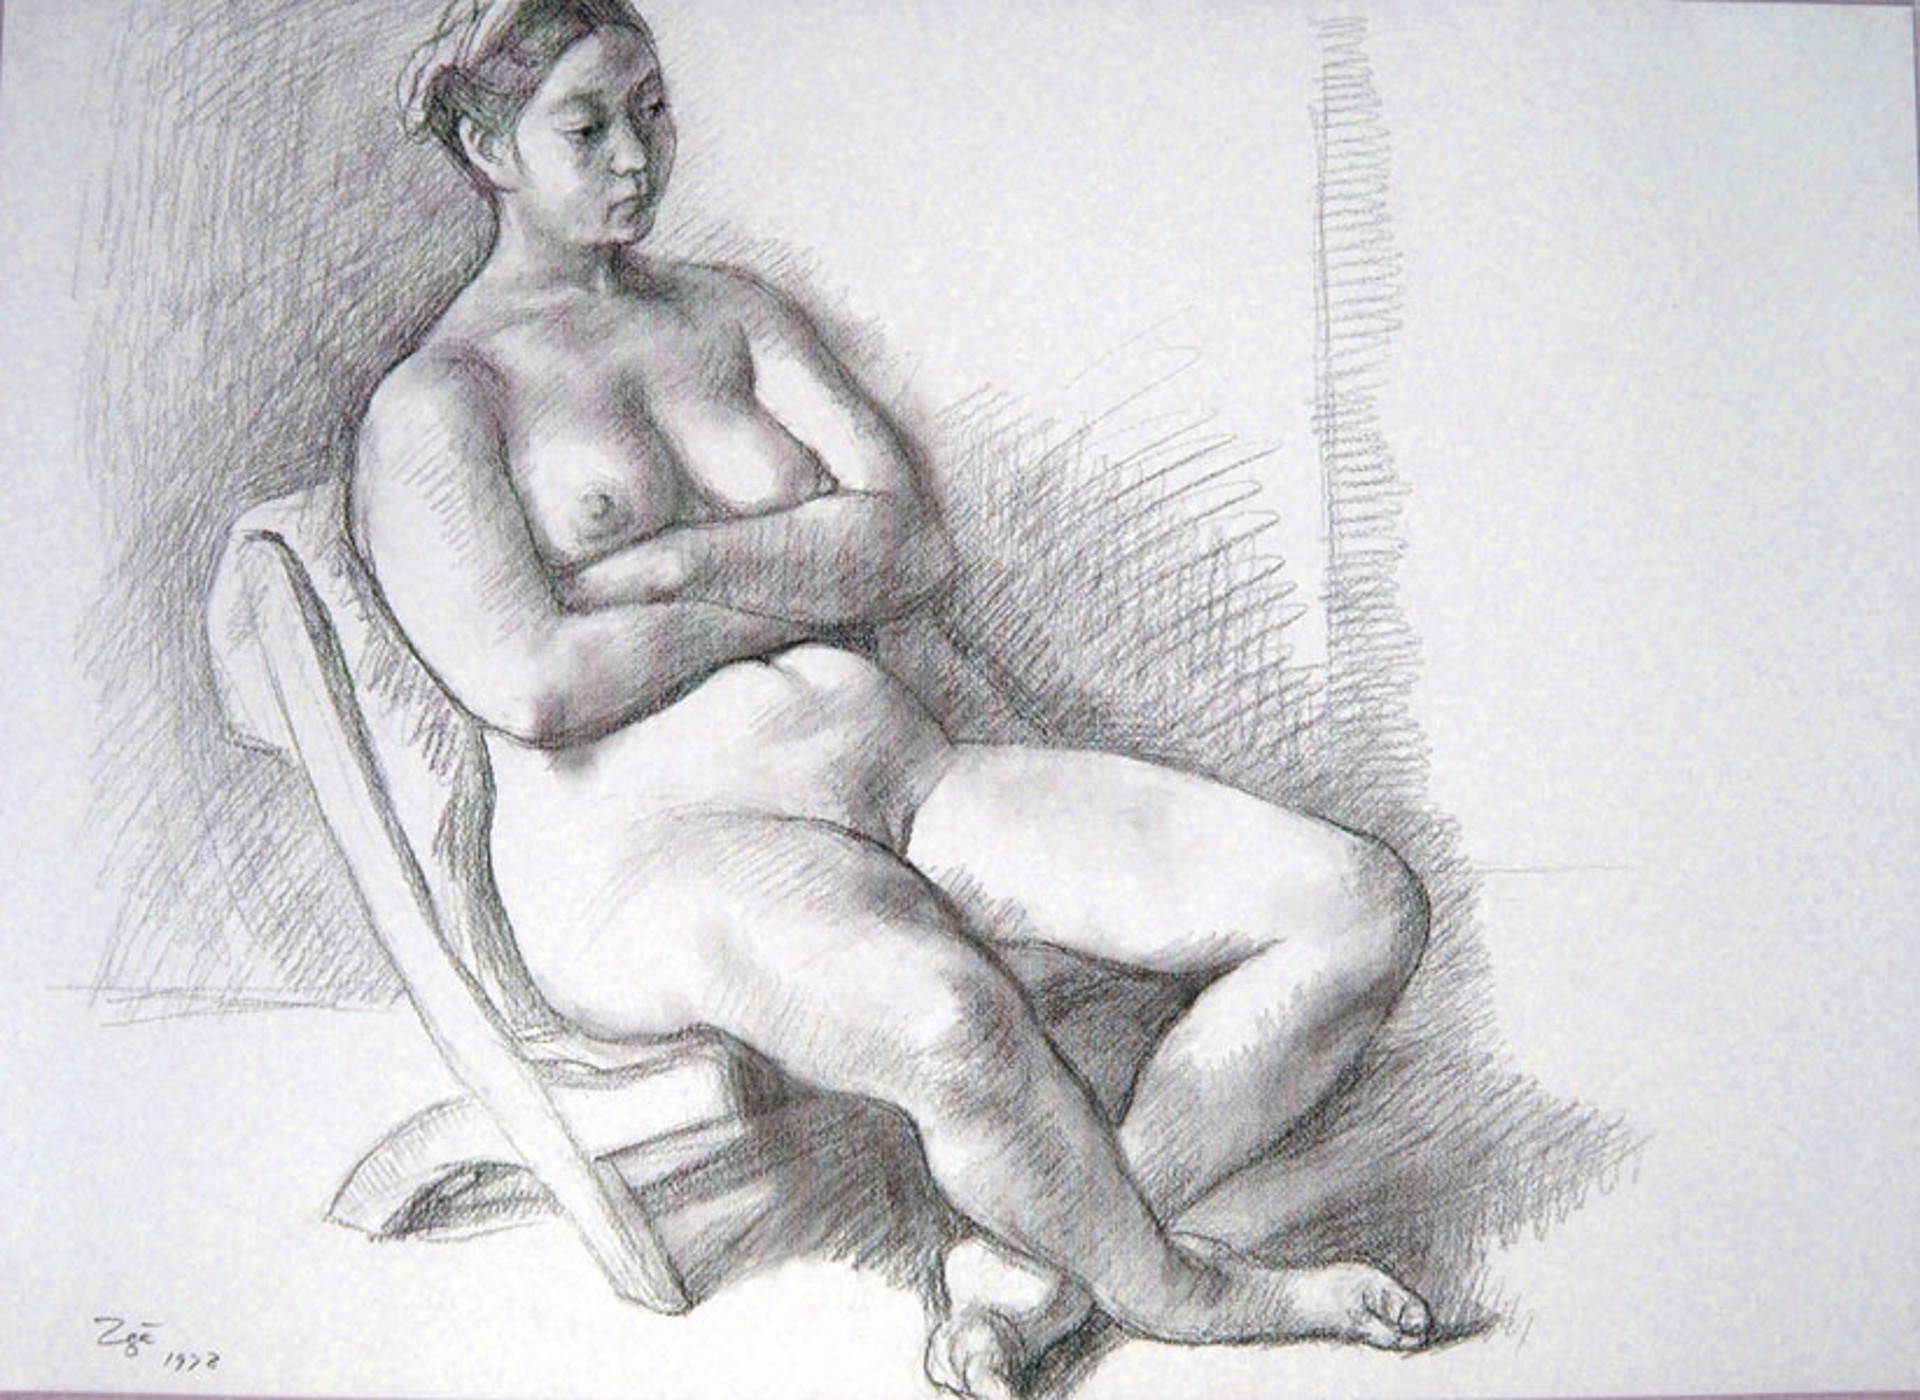 Desnudo Sentado by Francisco Zuniga